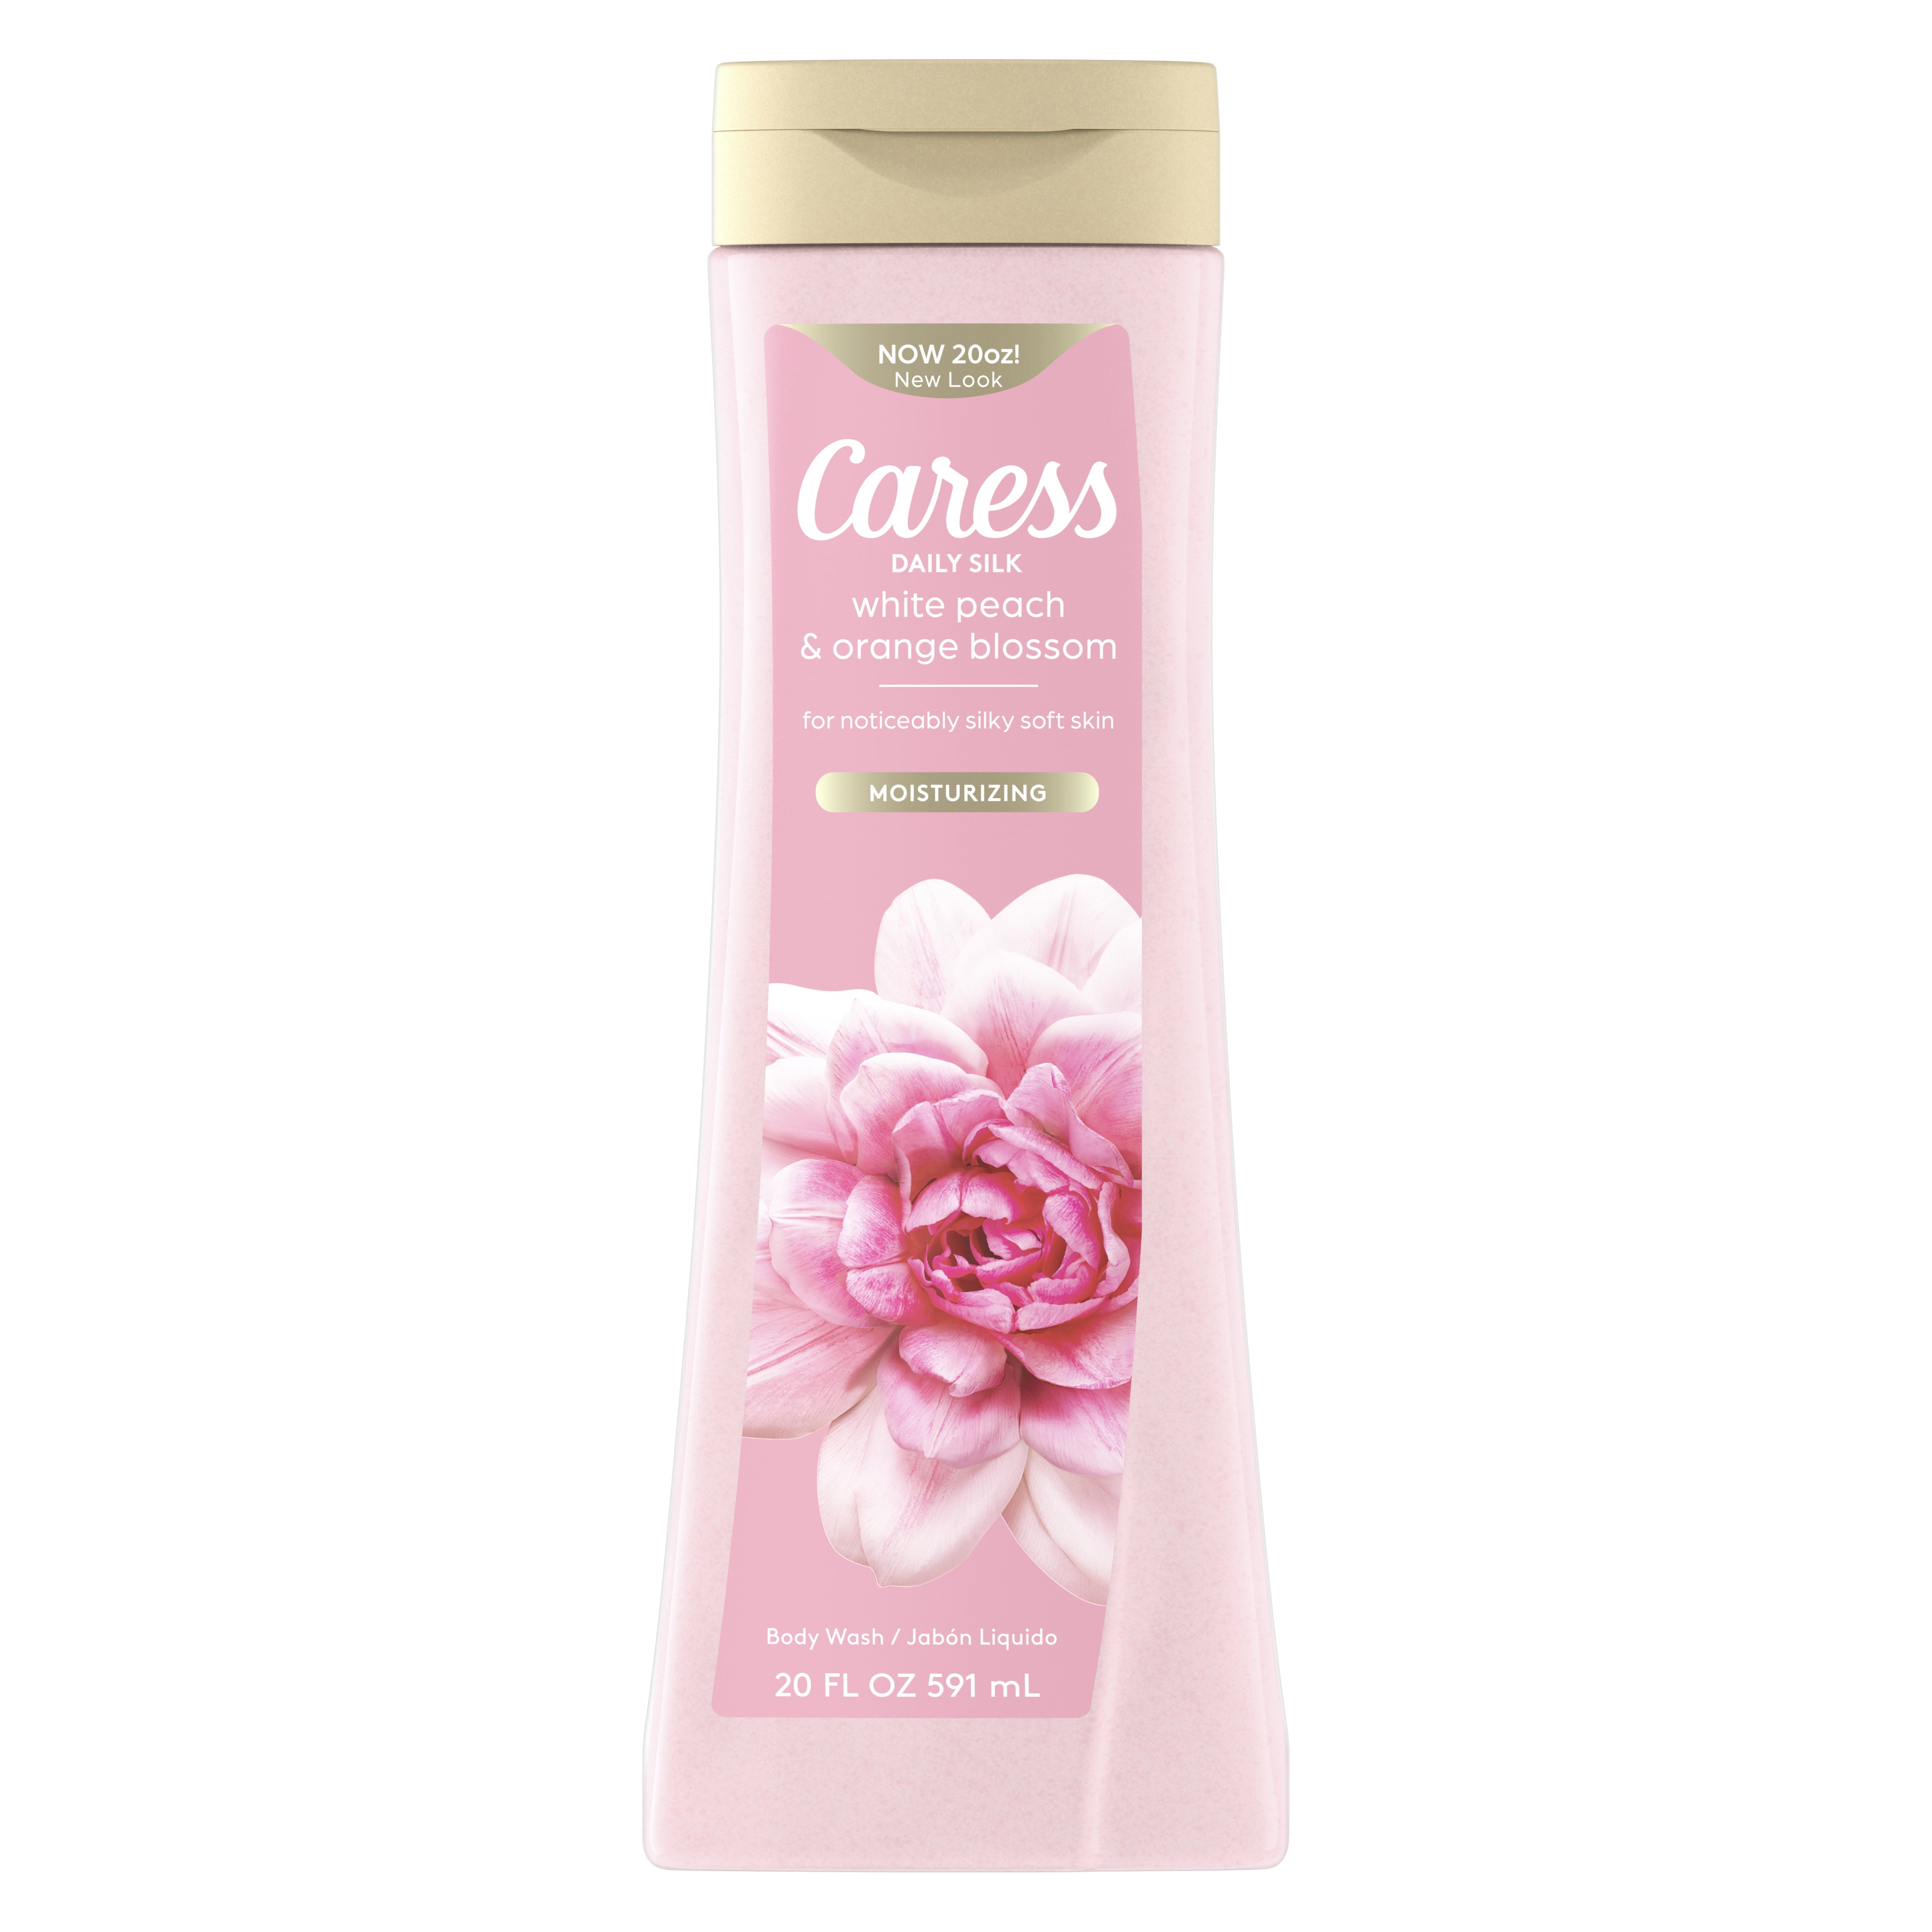 Caress Body Wash Daily Silk Body Soap With White Peach & Orange Blossom 20 fl oz